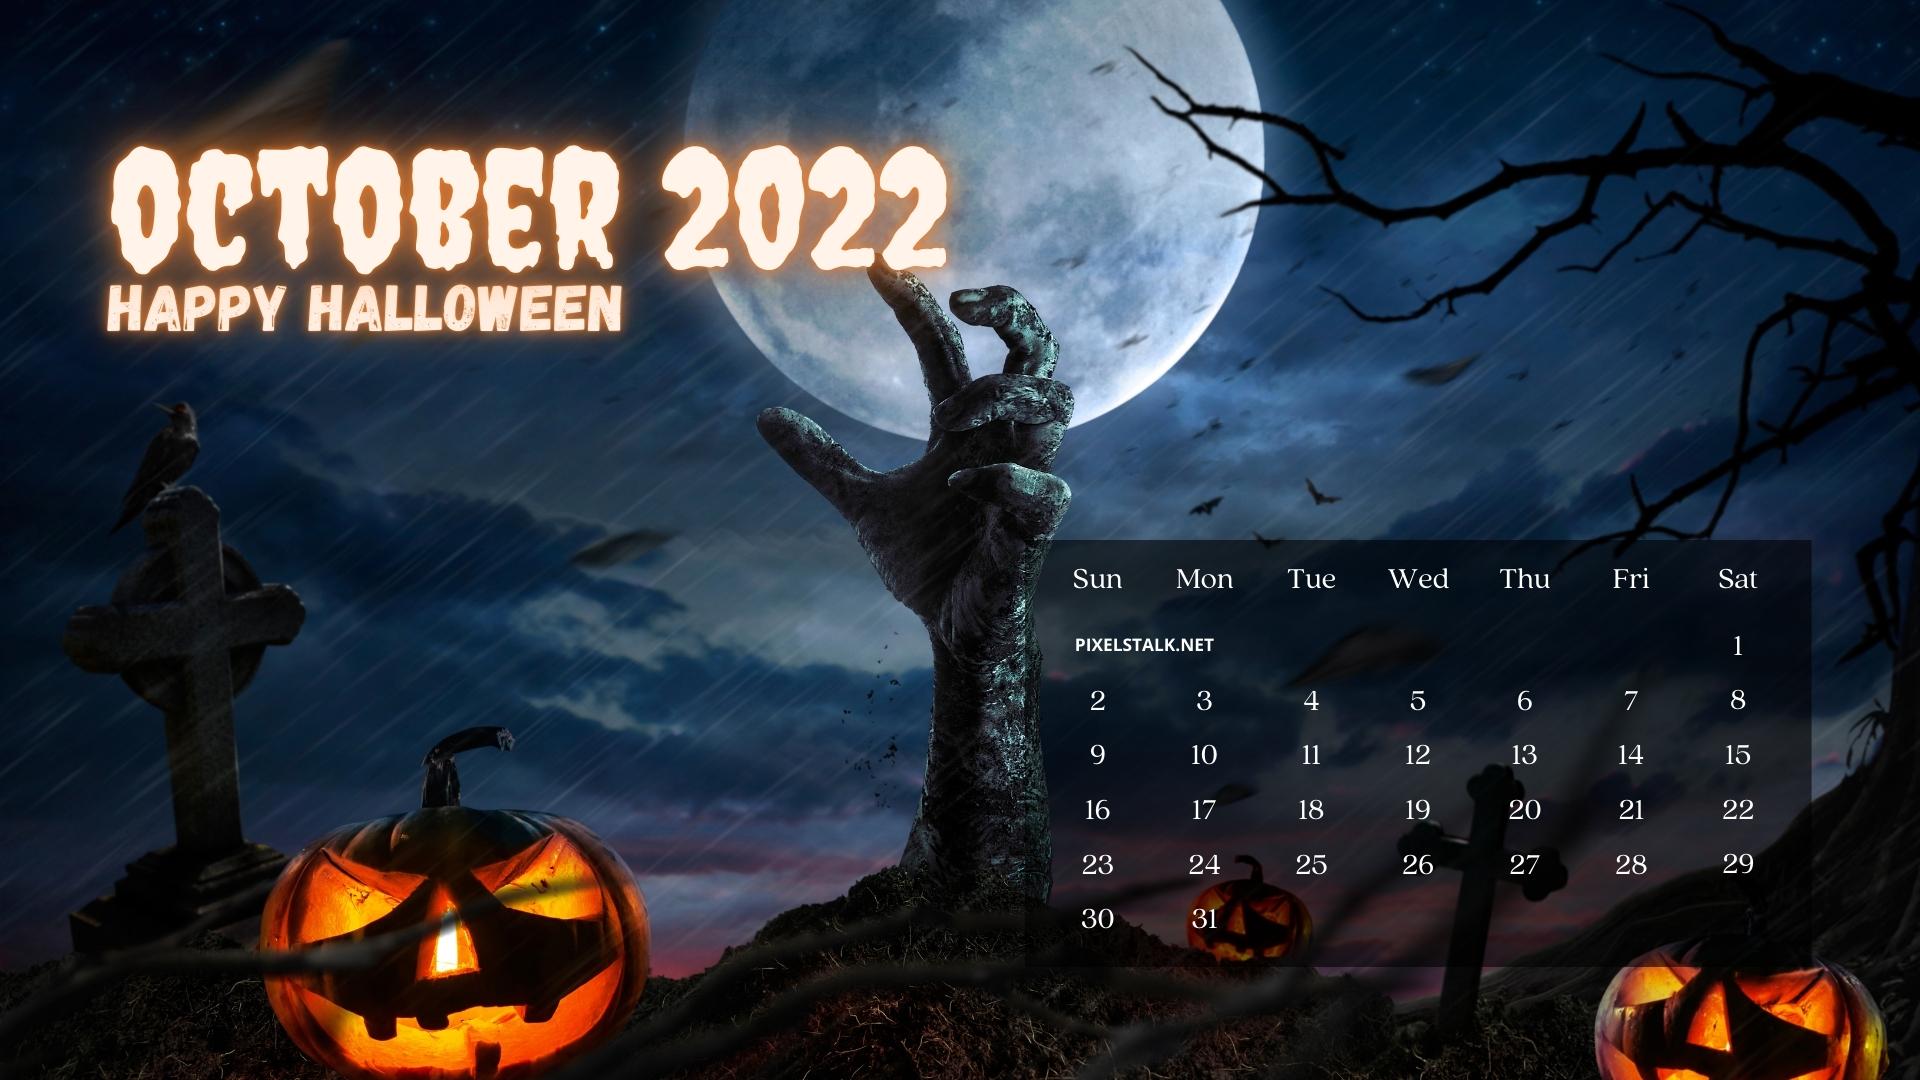 October 2022 Calendar HD Backgrounds Free Download